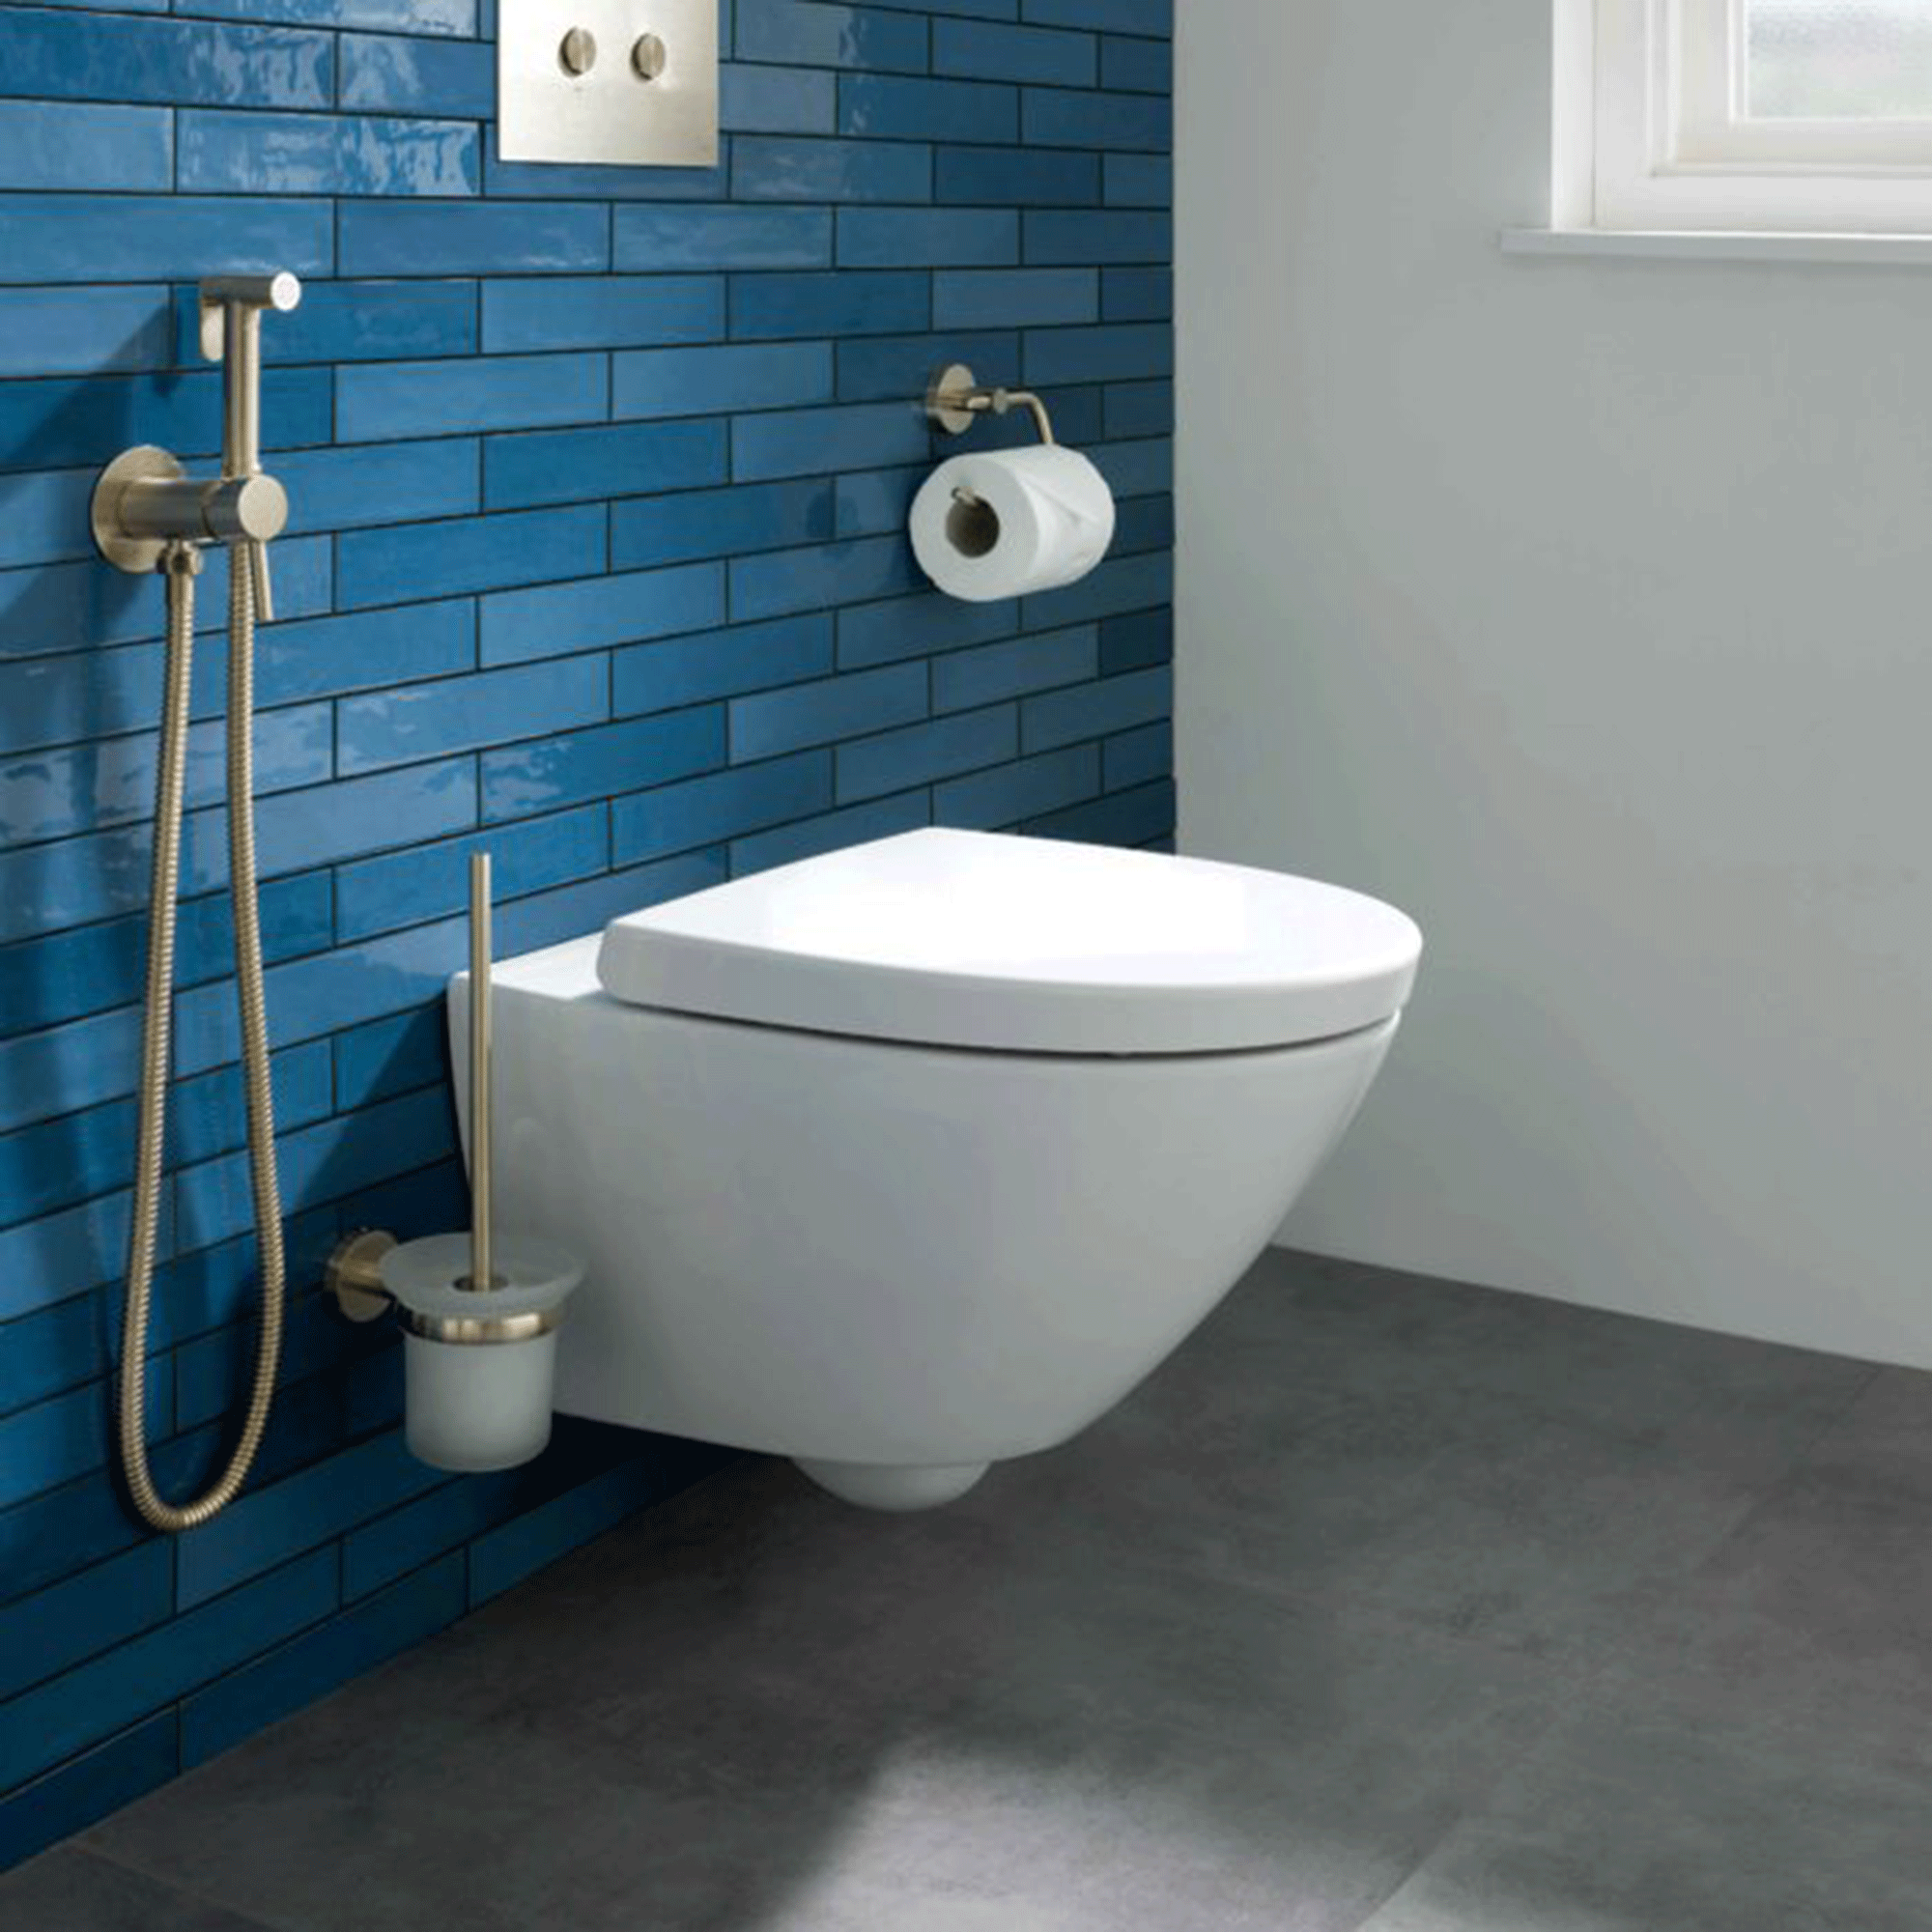 Blue bathroom with white toilet